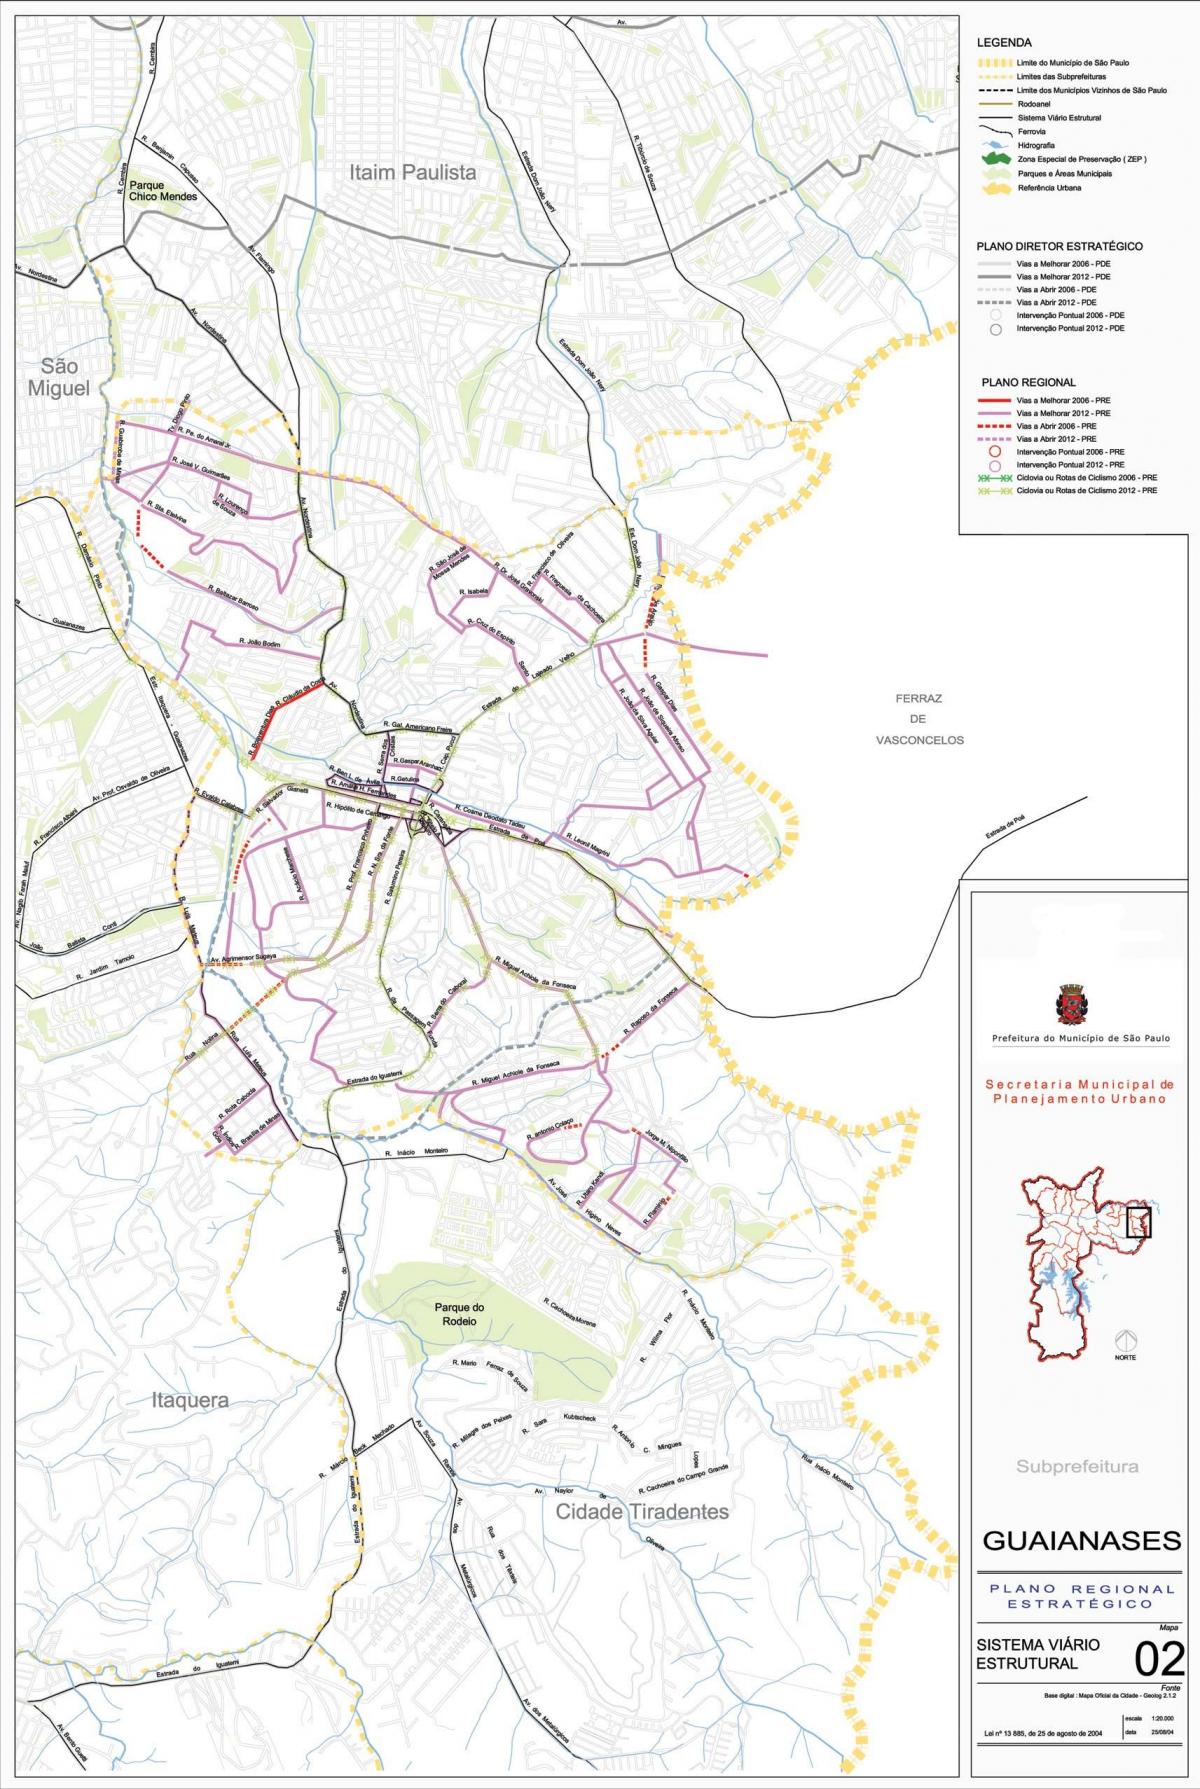 Mapa Guaianases São Paulo - Cesty